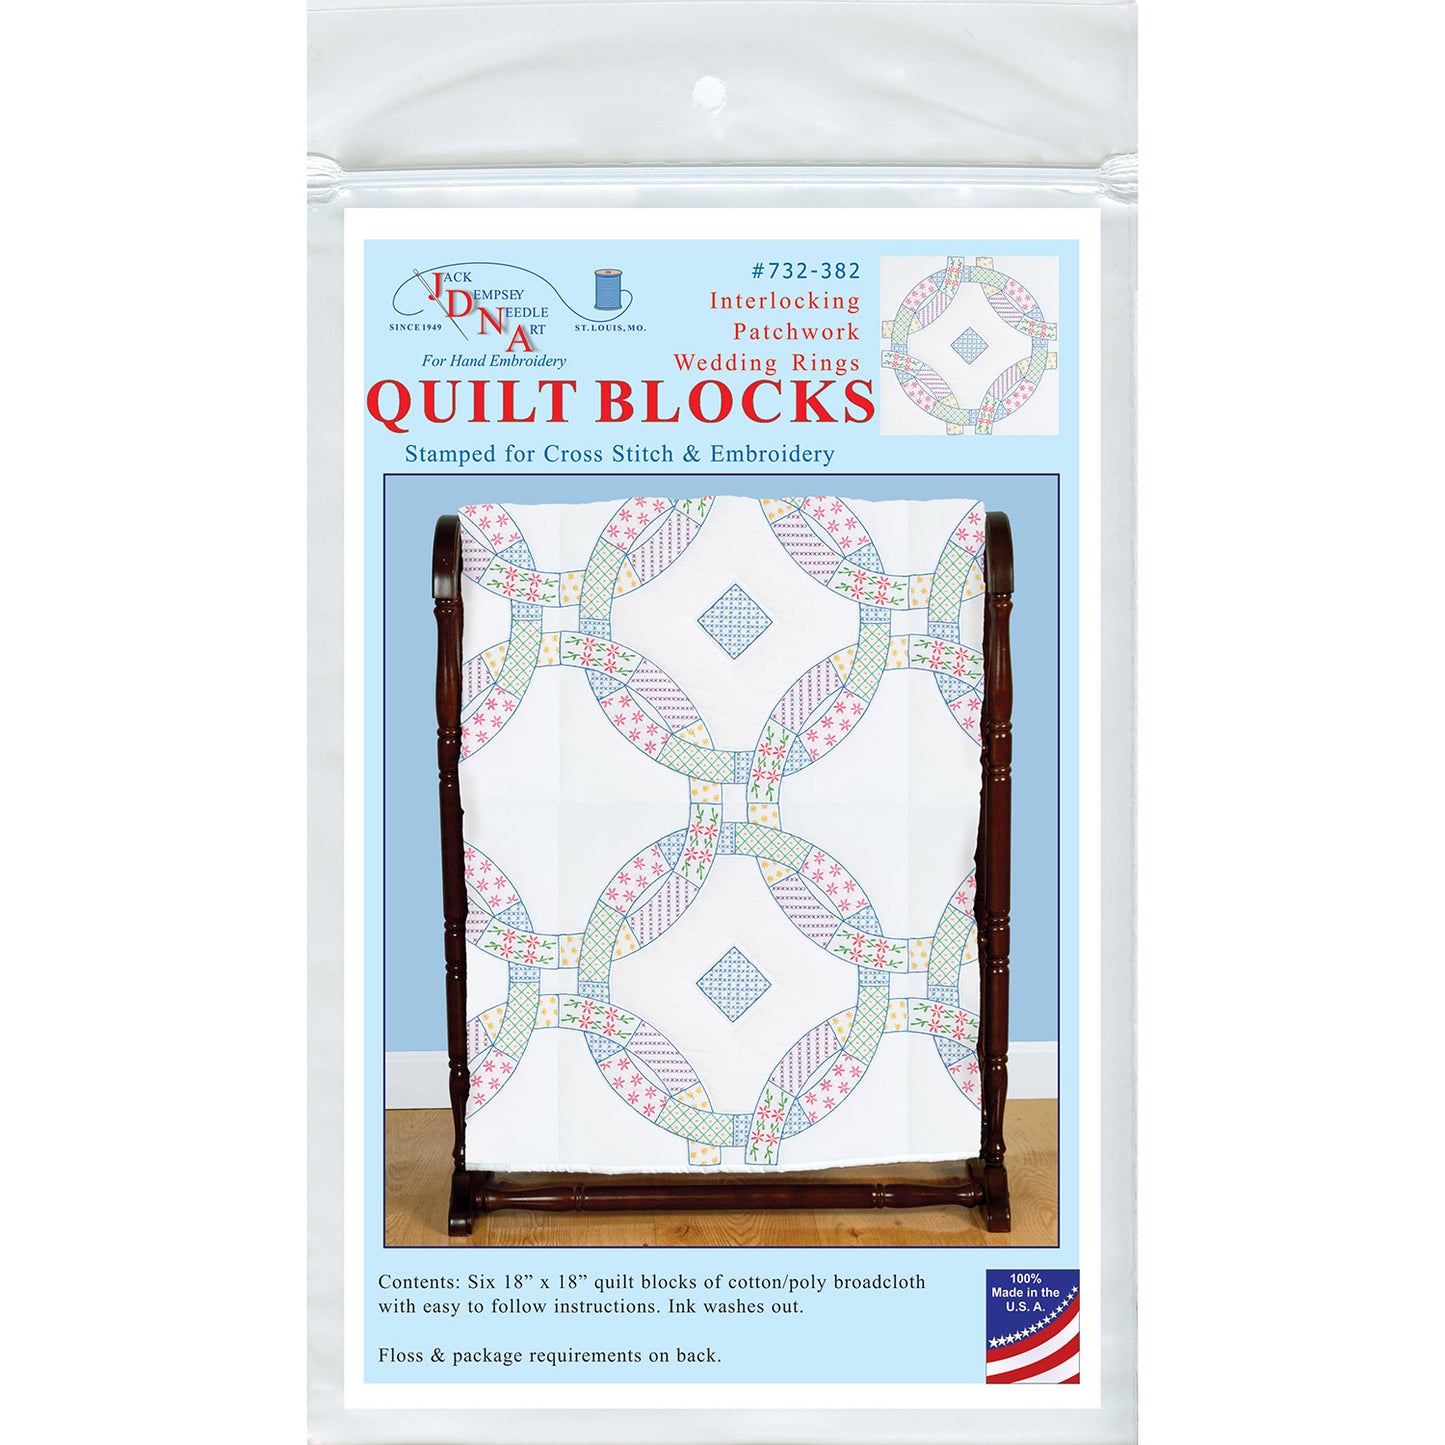 Interlocking Patchwork Wedding Rings 18" Embroidery Quilt Blocks Set Alternative View #2